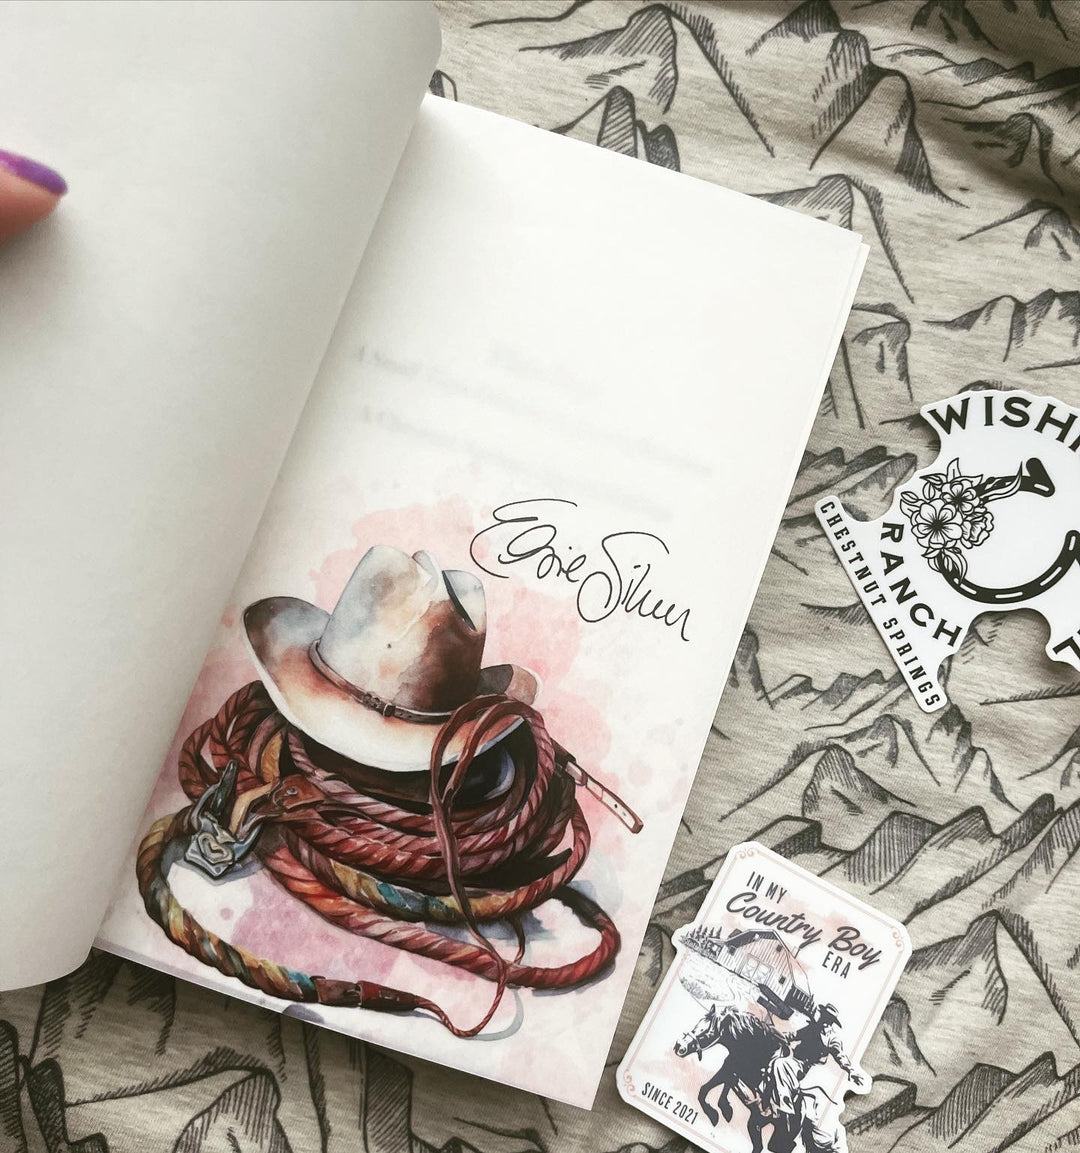 Elsie Silver - Cowboy Hat Novel Notes™ - Digitally Signed Overlay Print